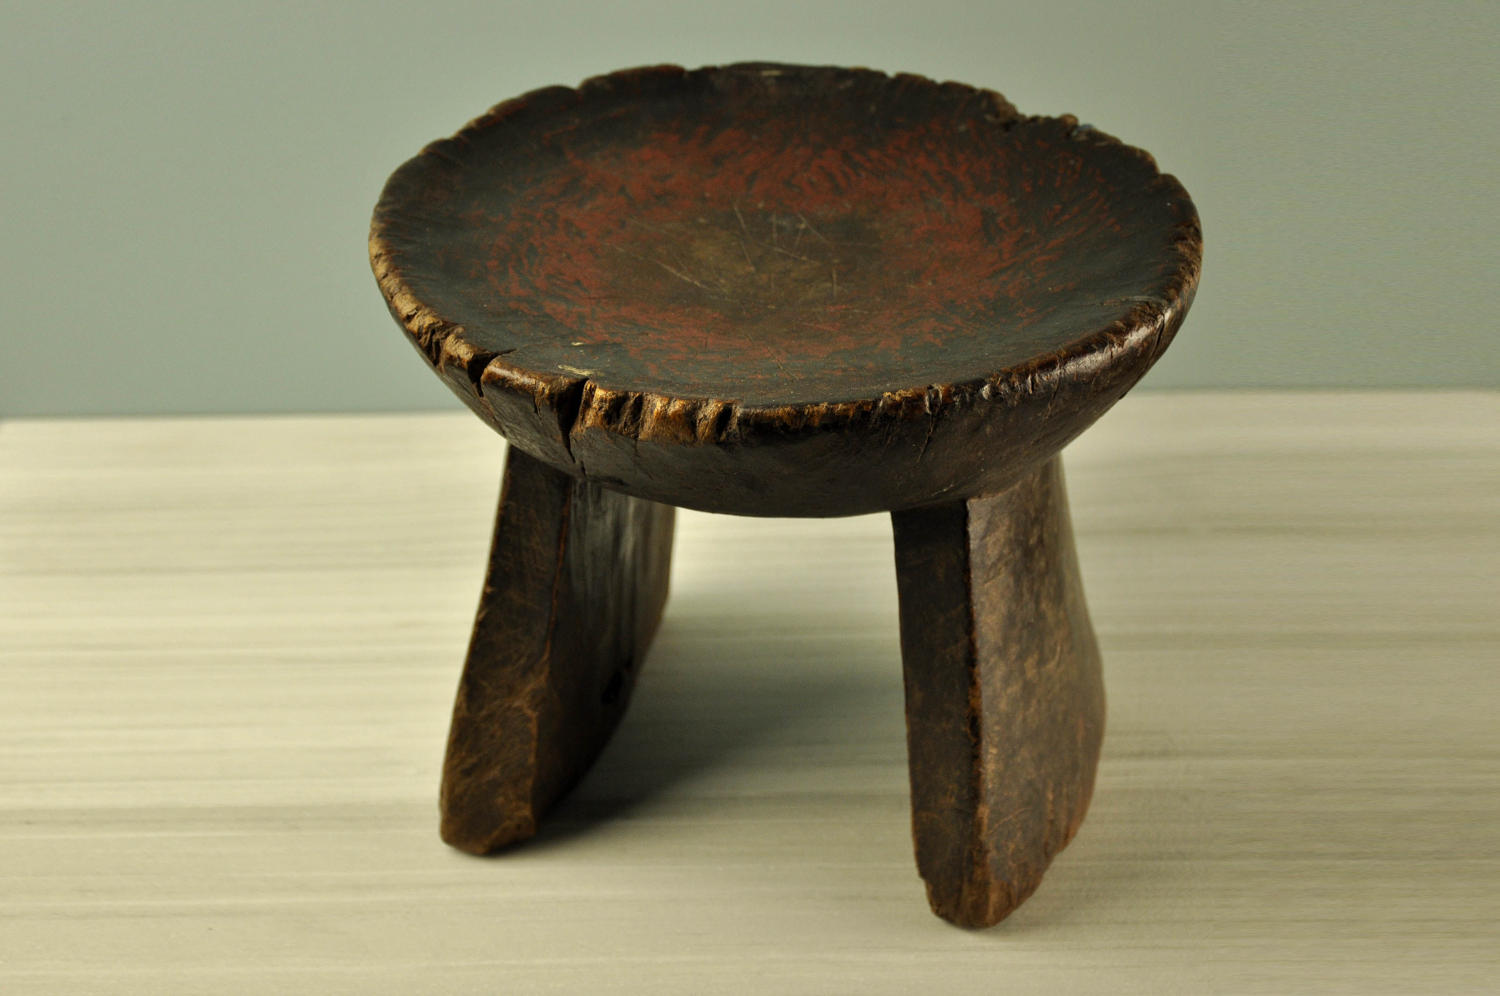 Ethiopian stool